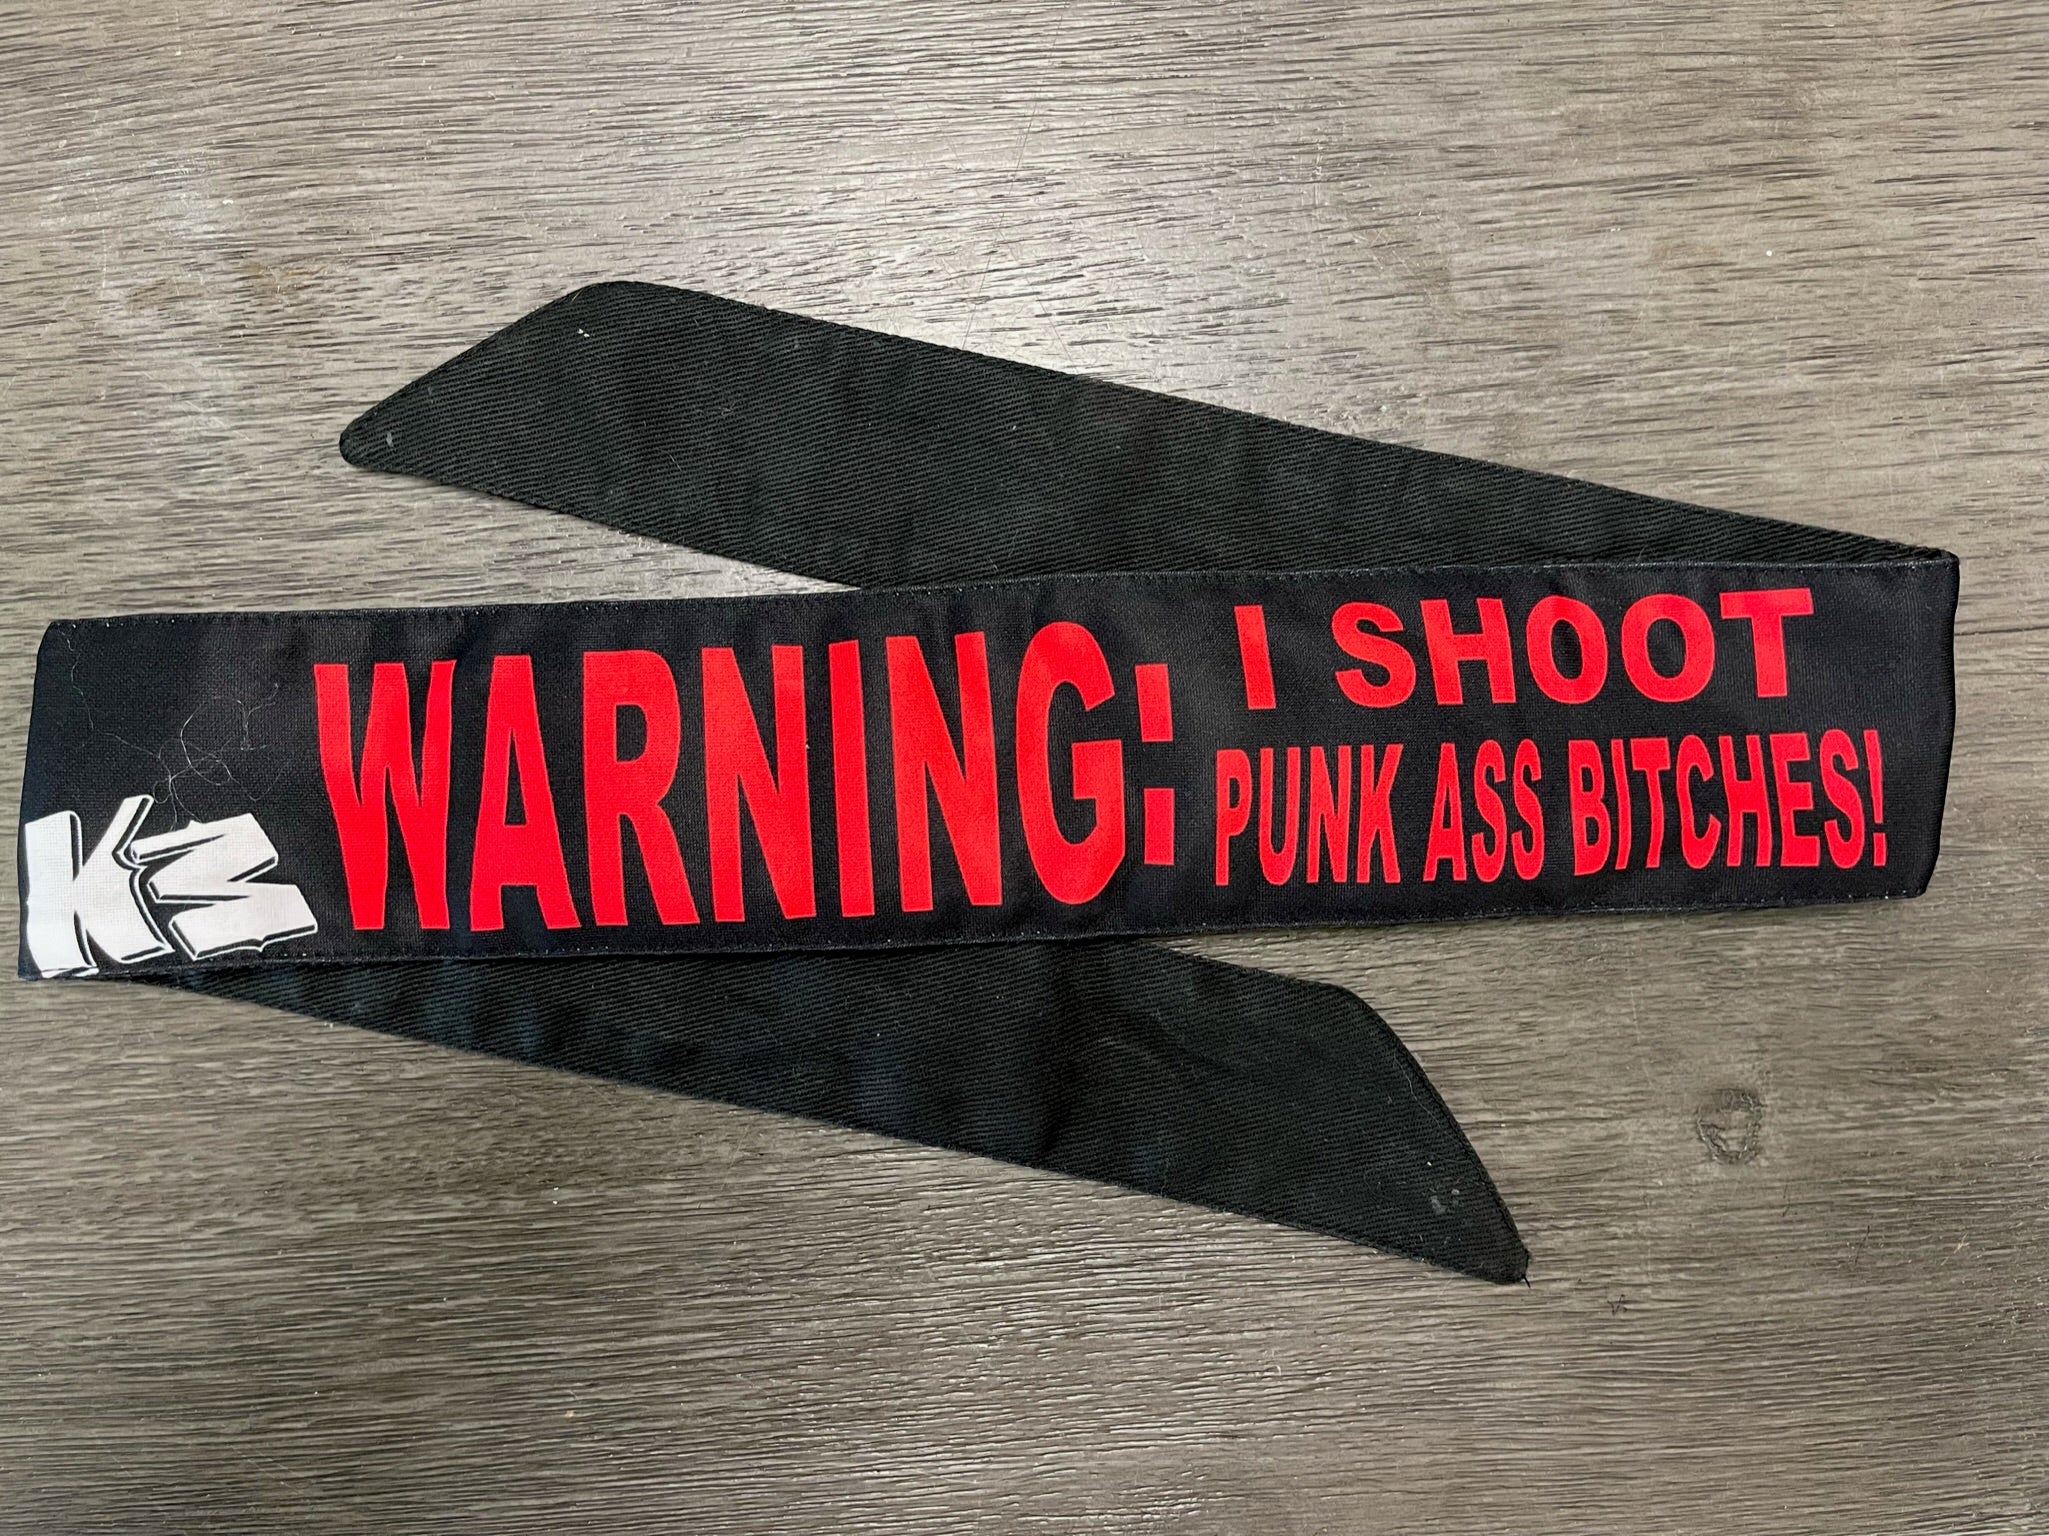 Used KM Headband - Black / Red "Warning: I Shoot..."